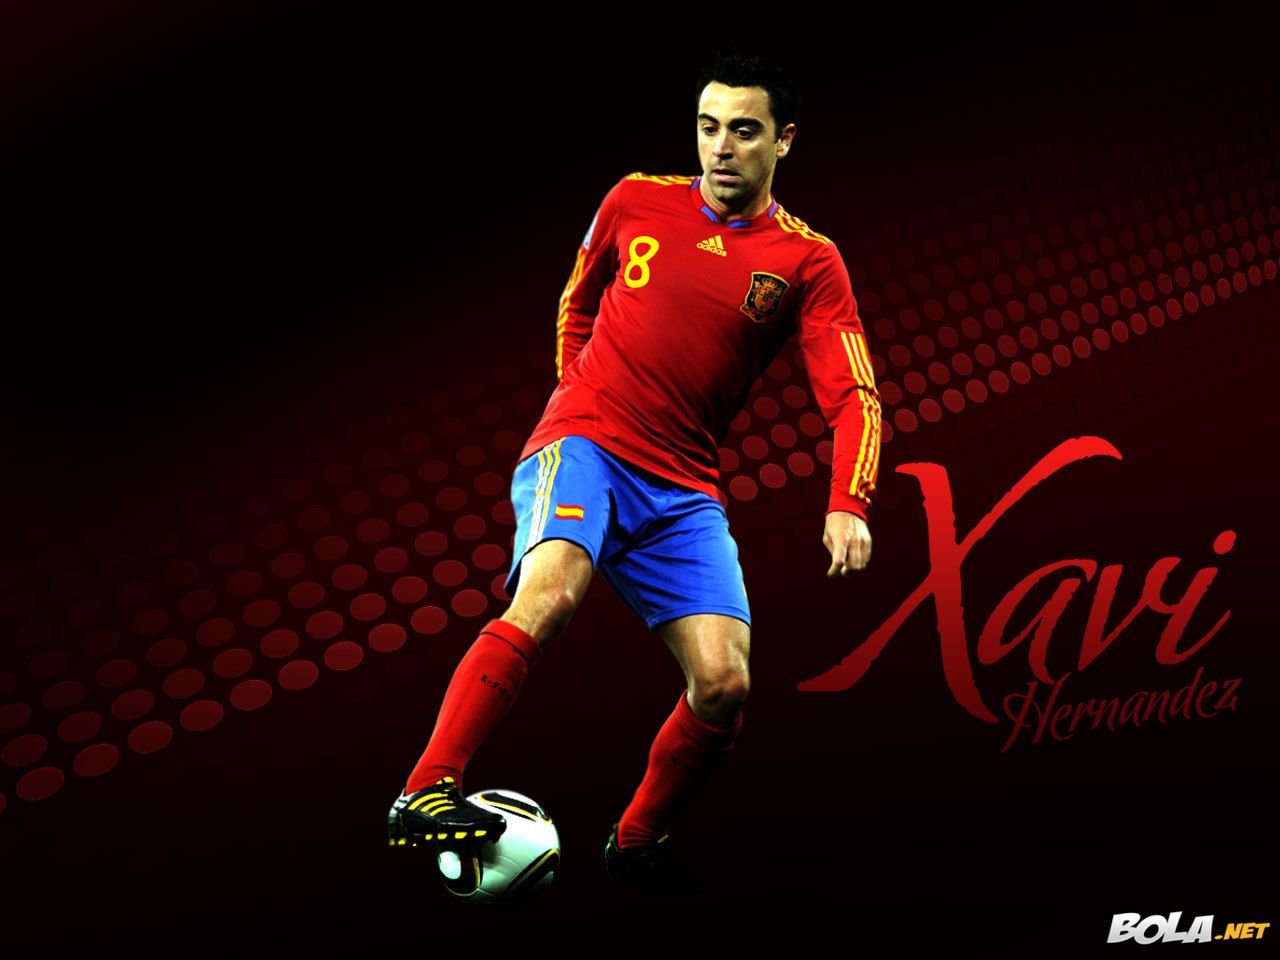 MARKET WALLPAPERS Best Football Wallpaper: Xavi Hernandez Spain 2012